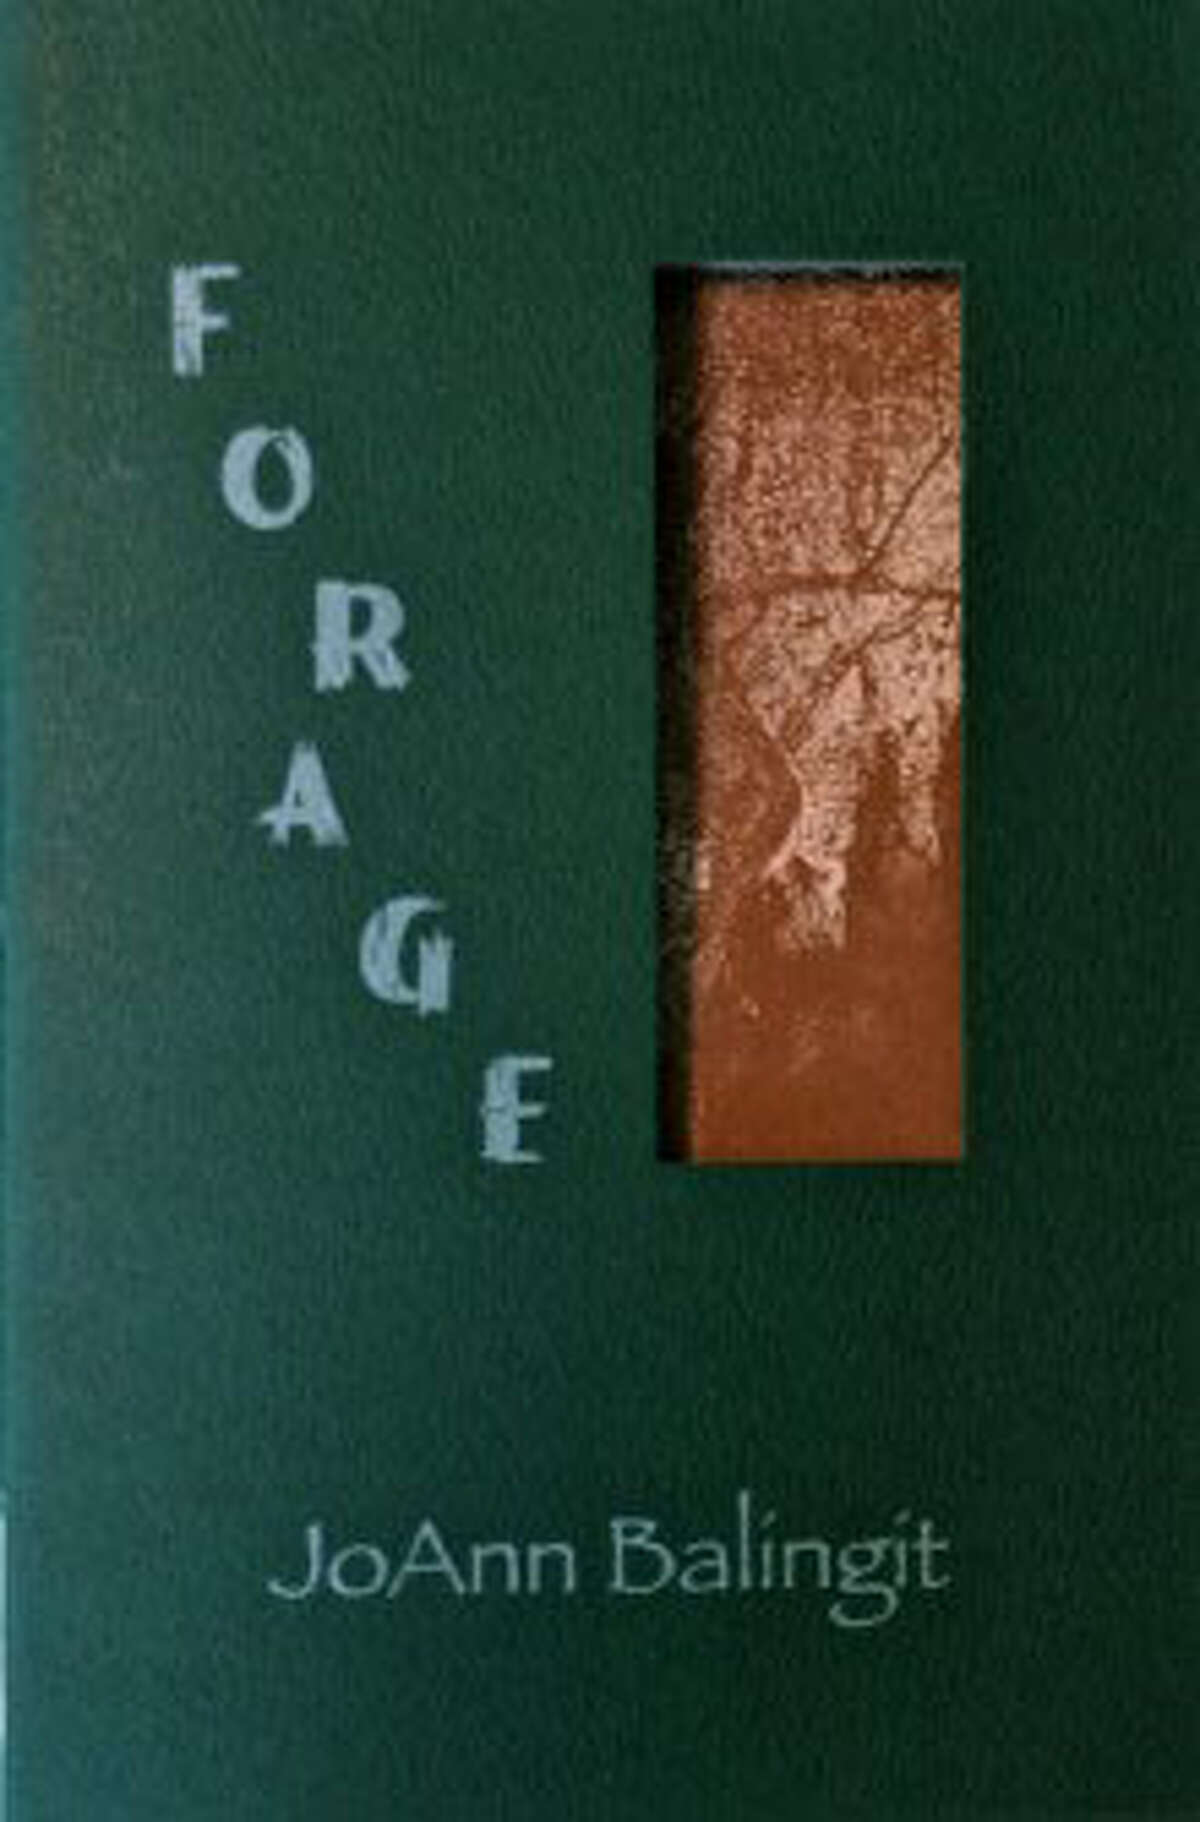 "Forage" by JoAnn Balingit for poetic diversity